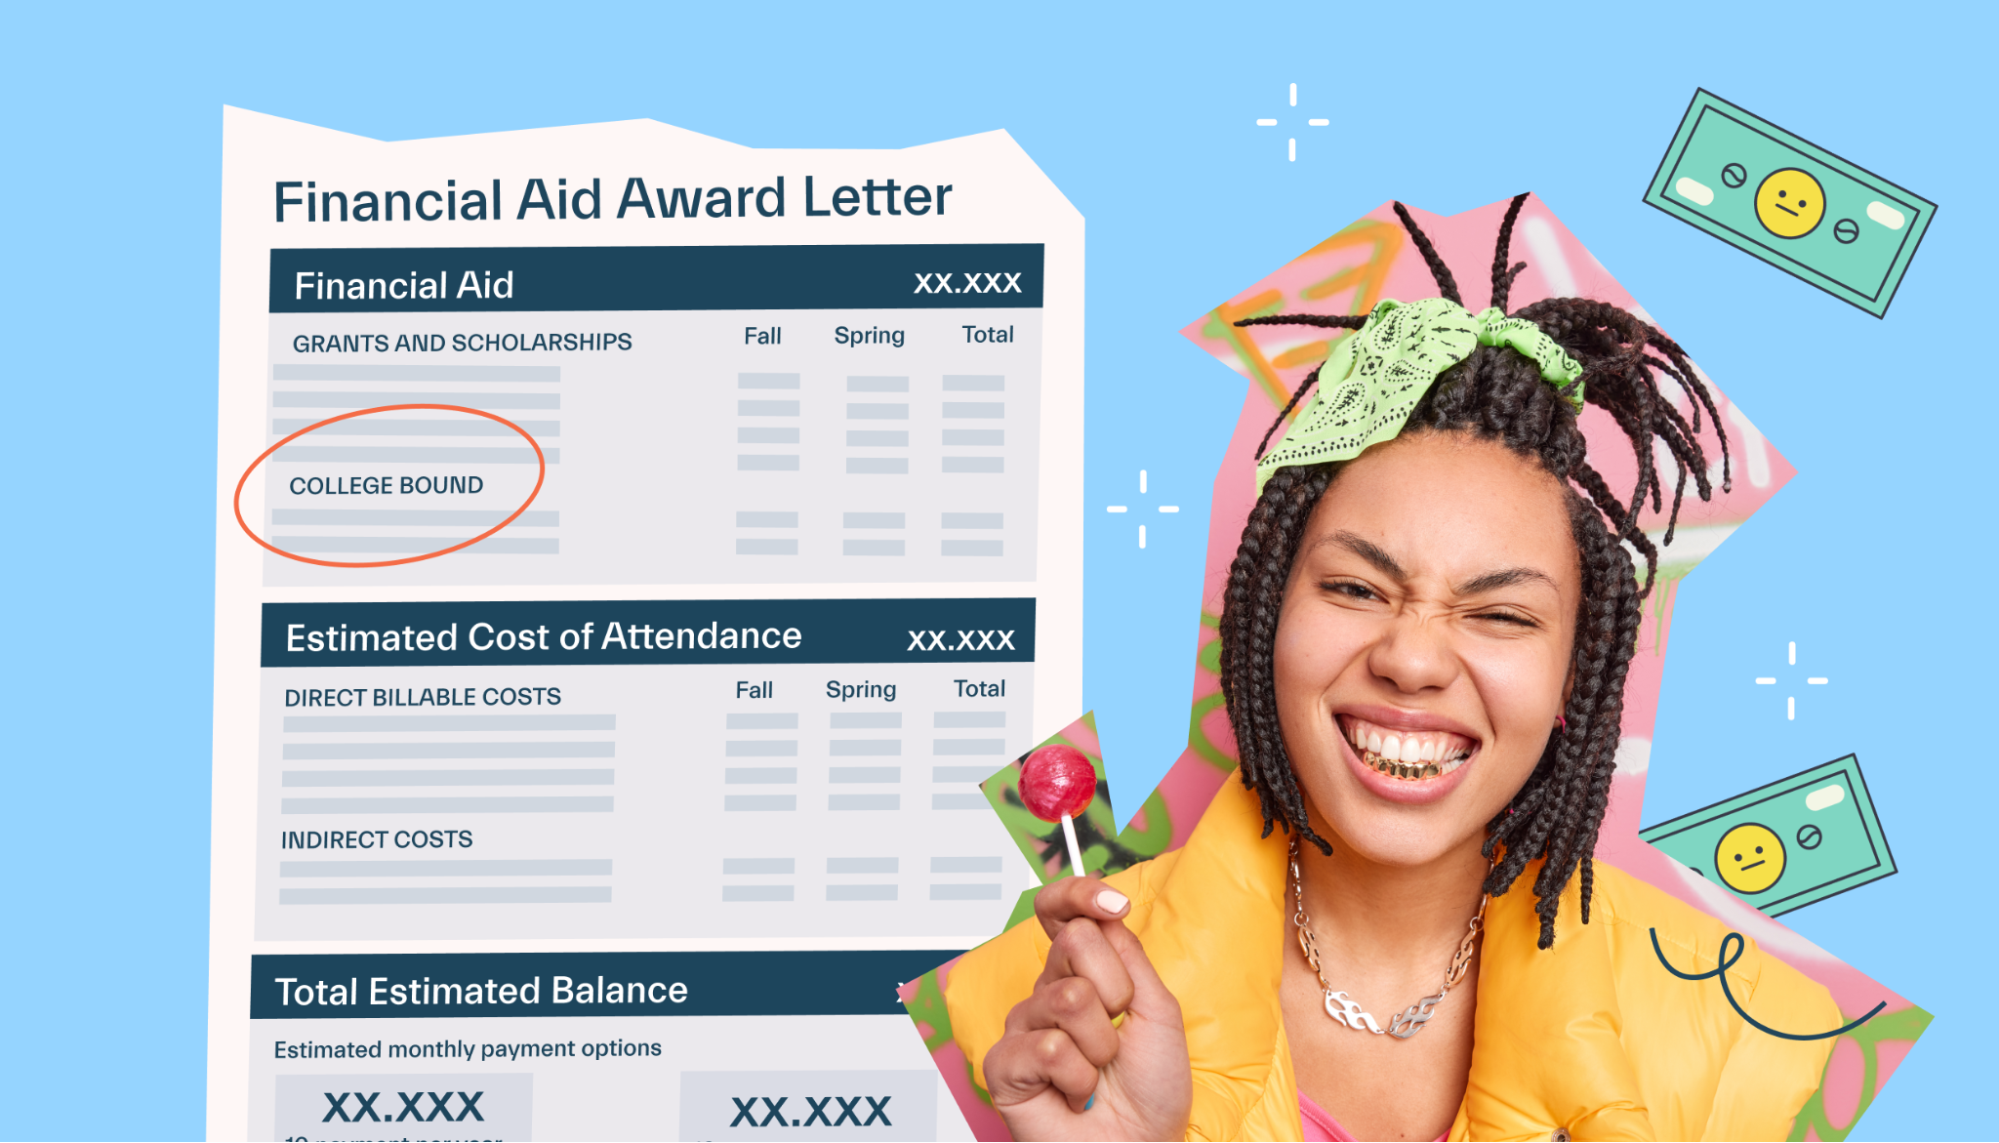 Financial aid award letter